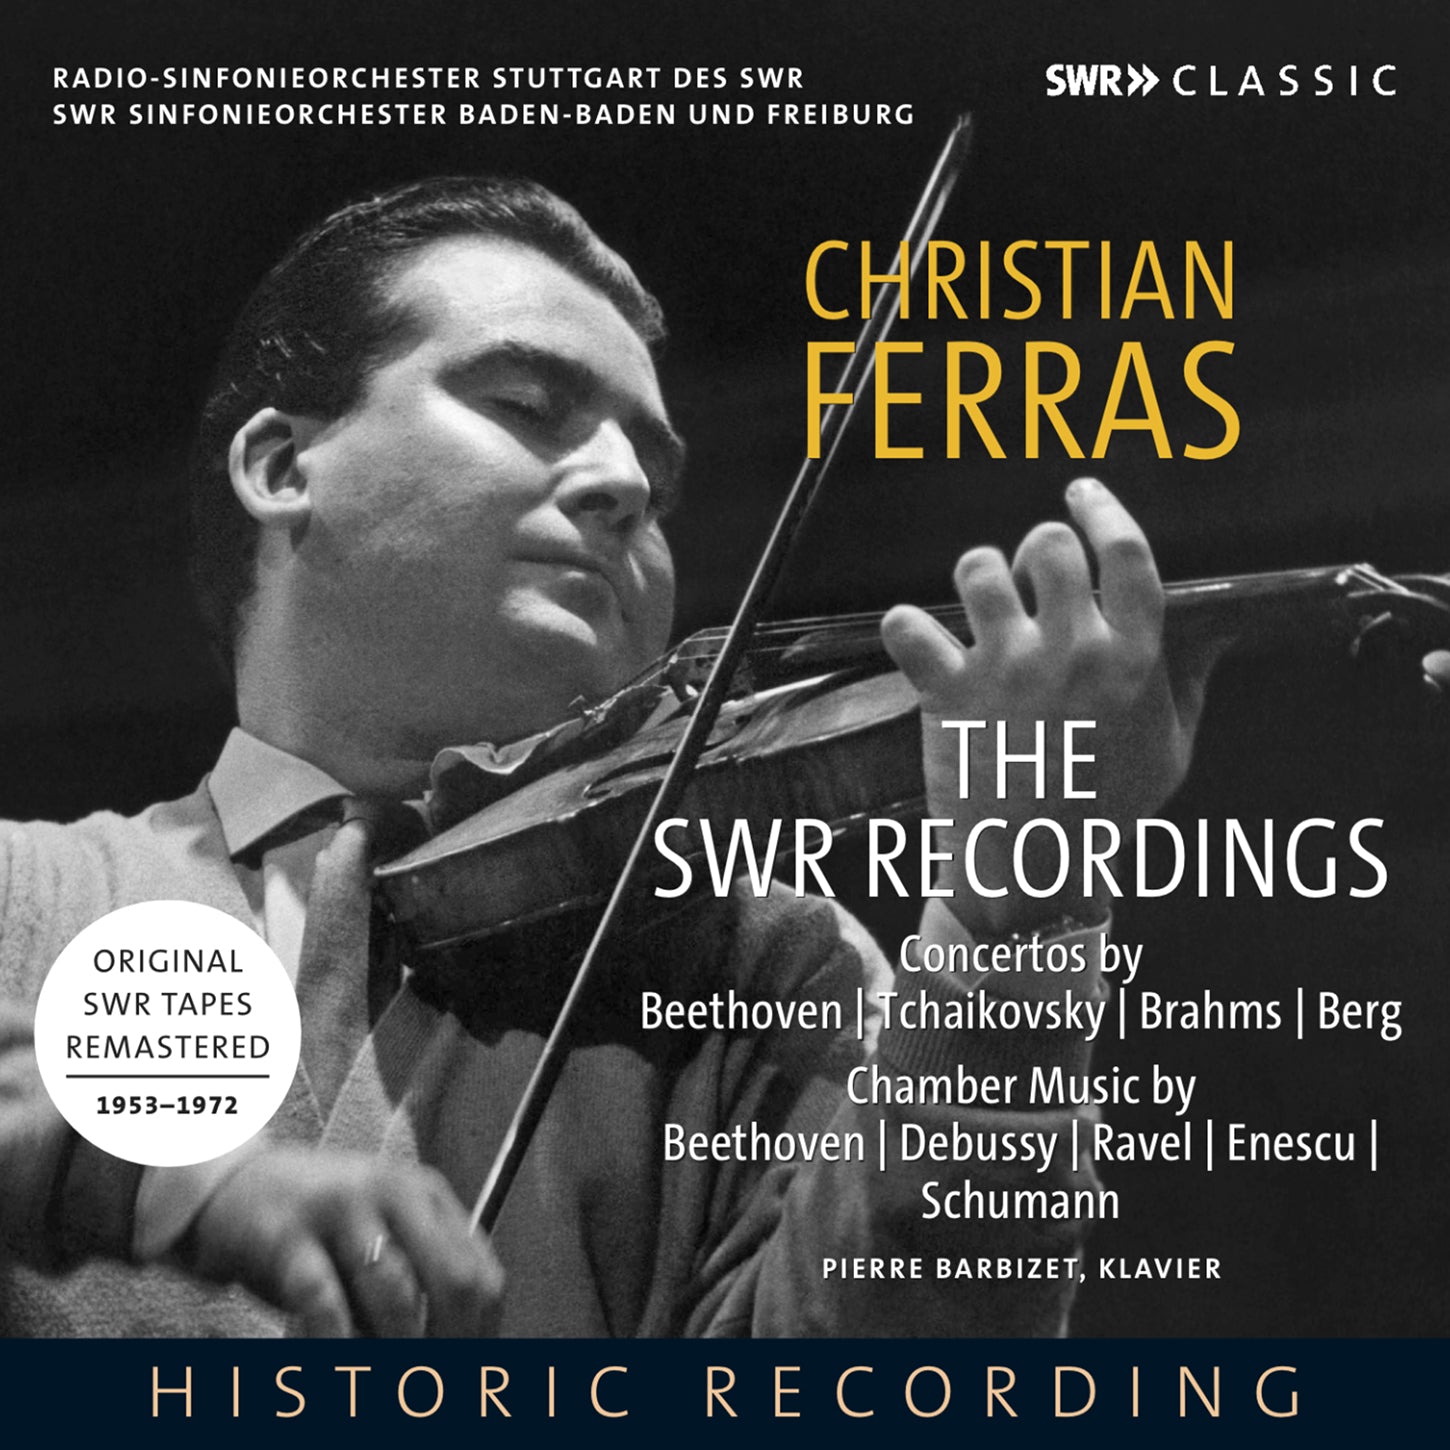 Christian Ferras: The SWR Recordings